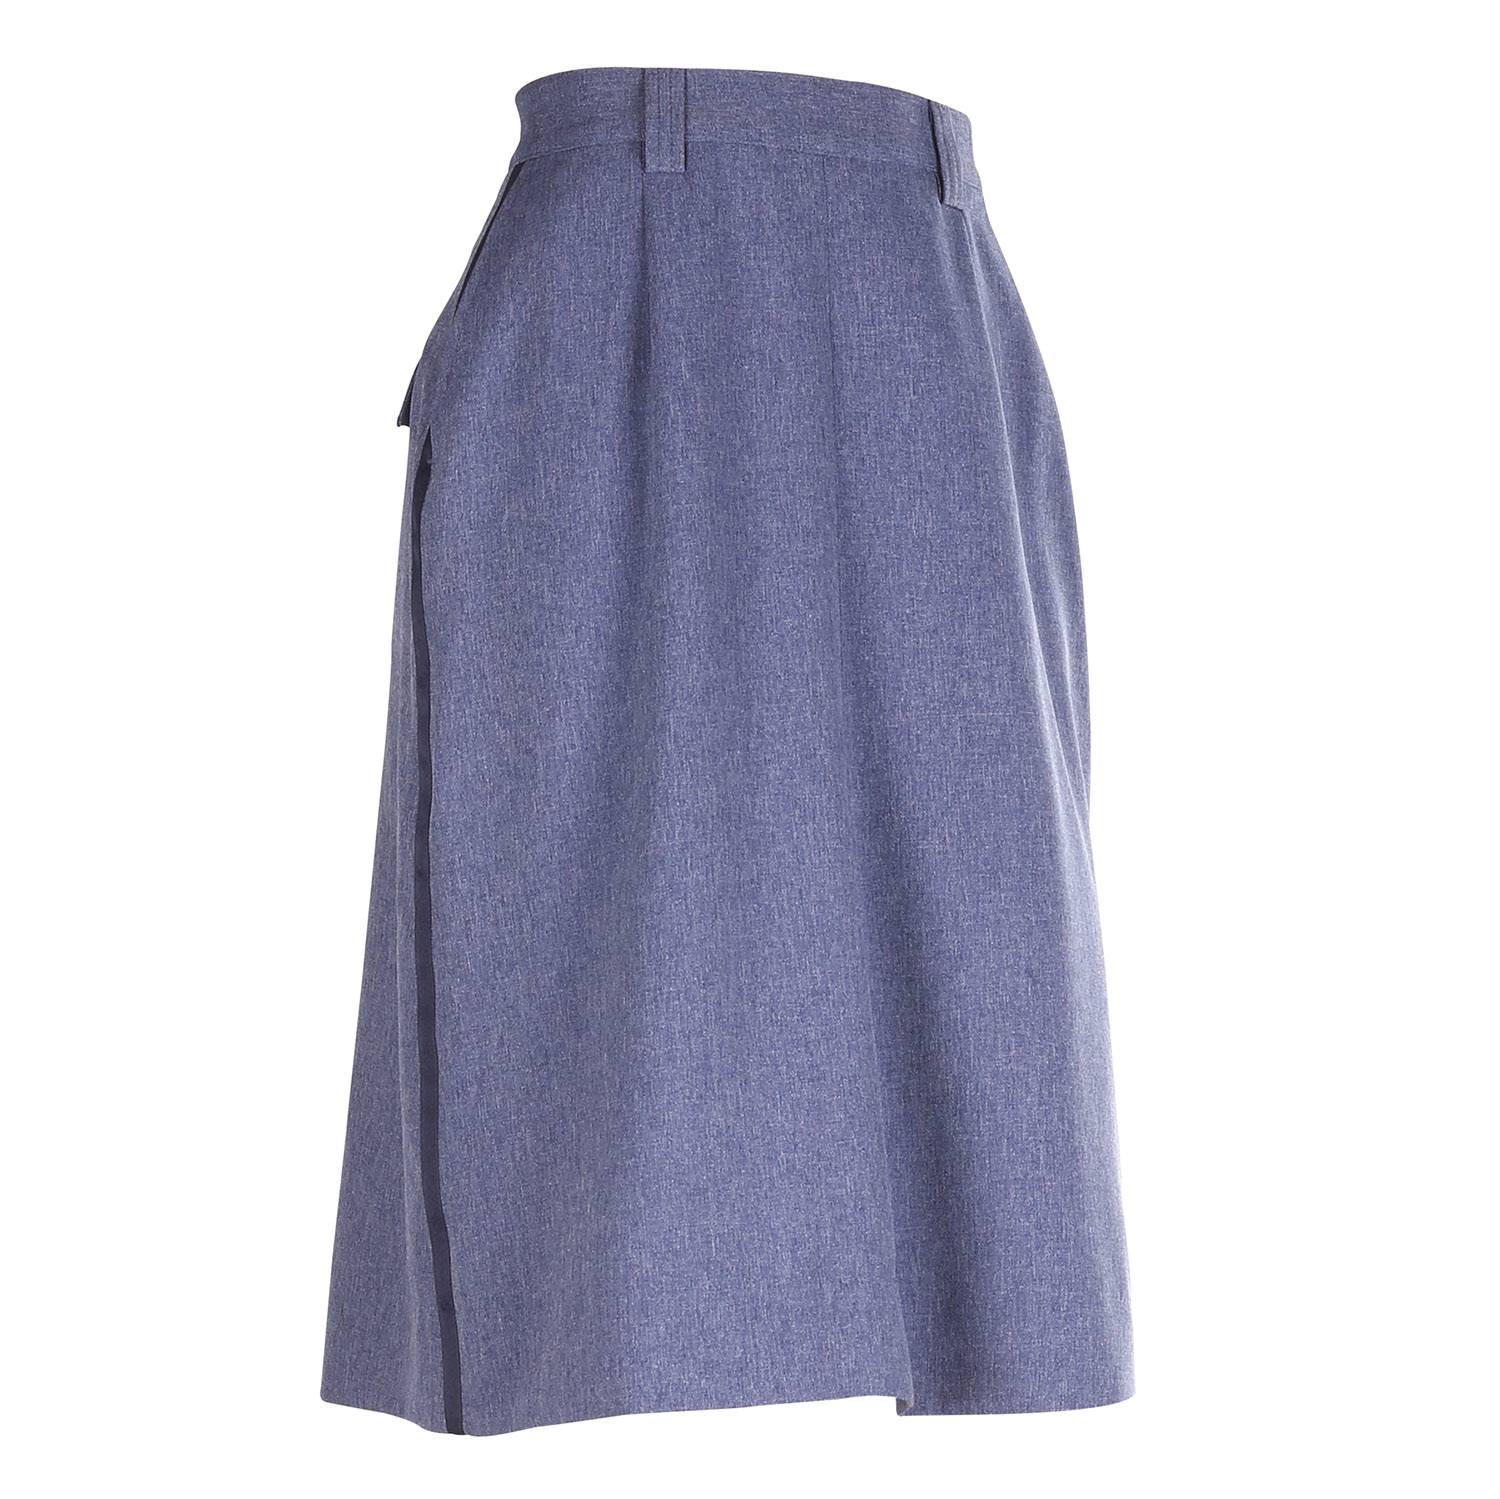 Womens Postal Uniform Skirt for Letter Carriers and Motor Ve